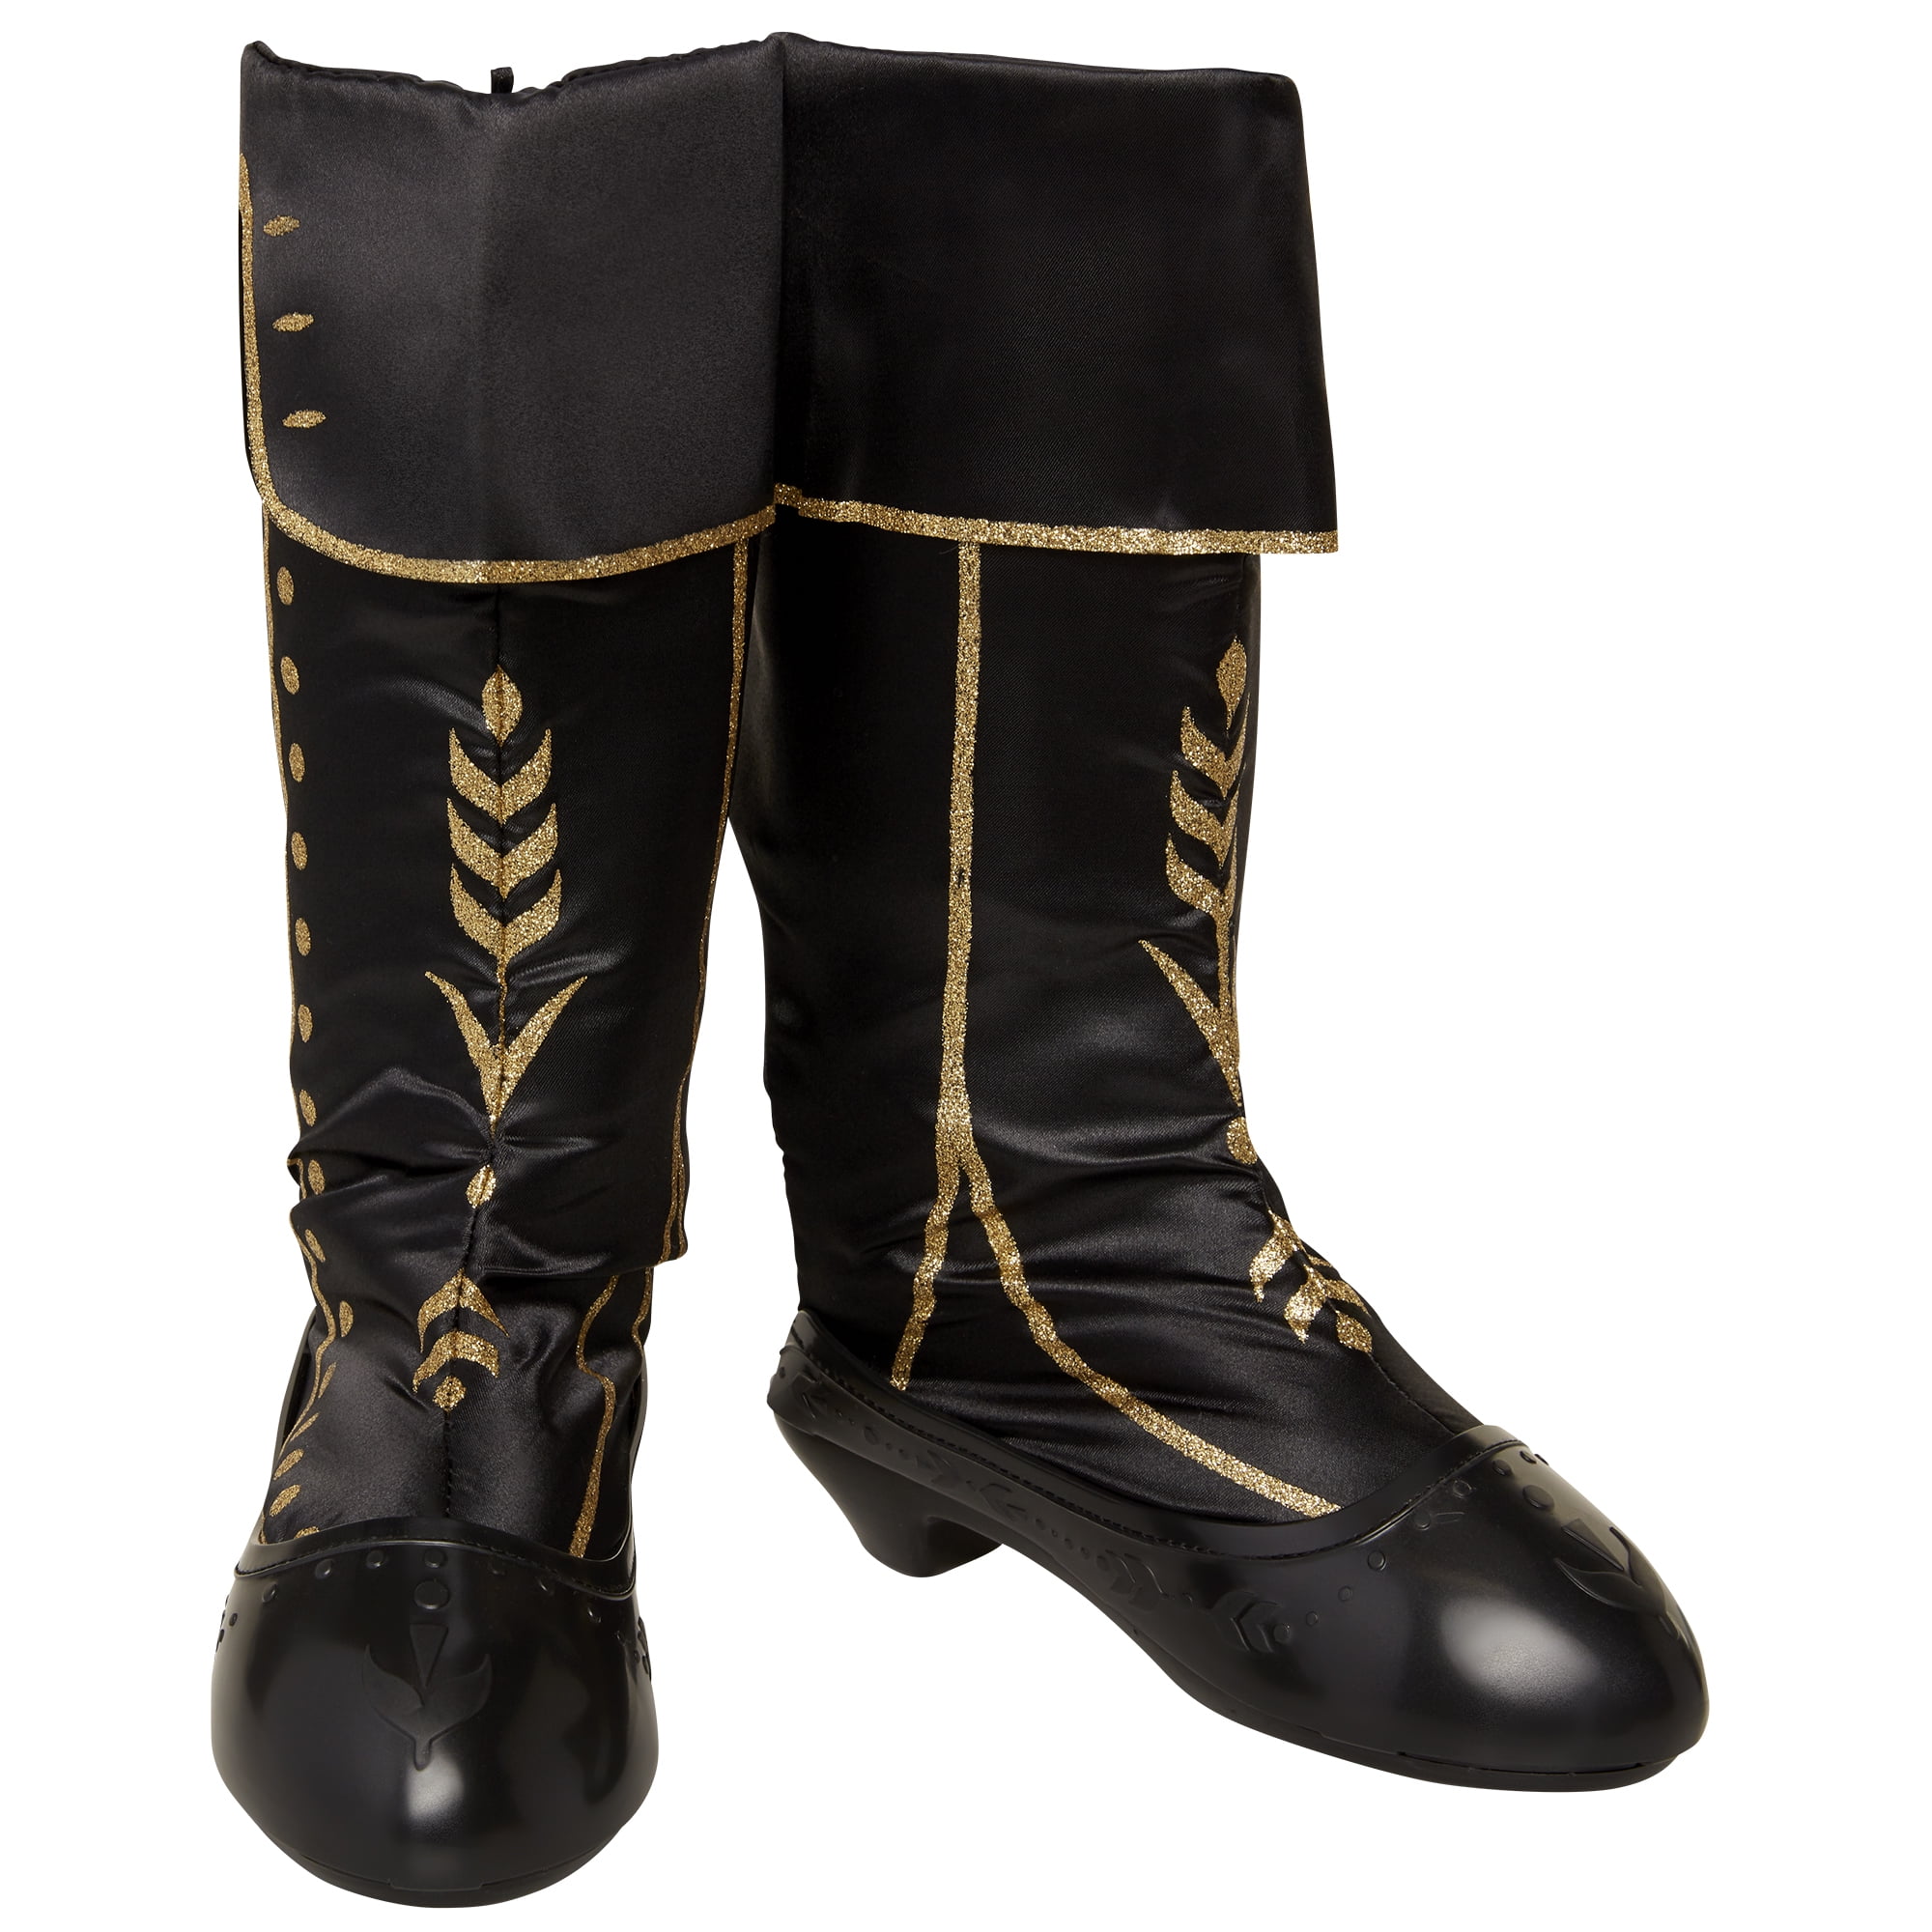 dress boots at walmart